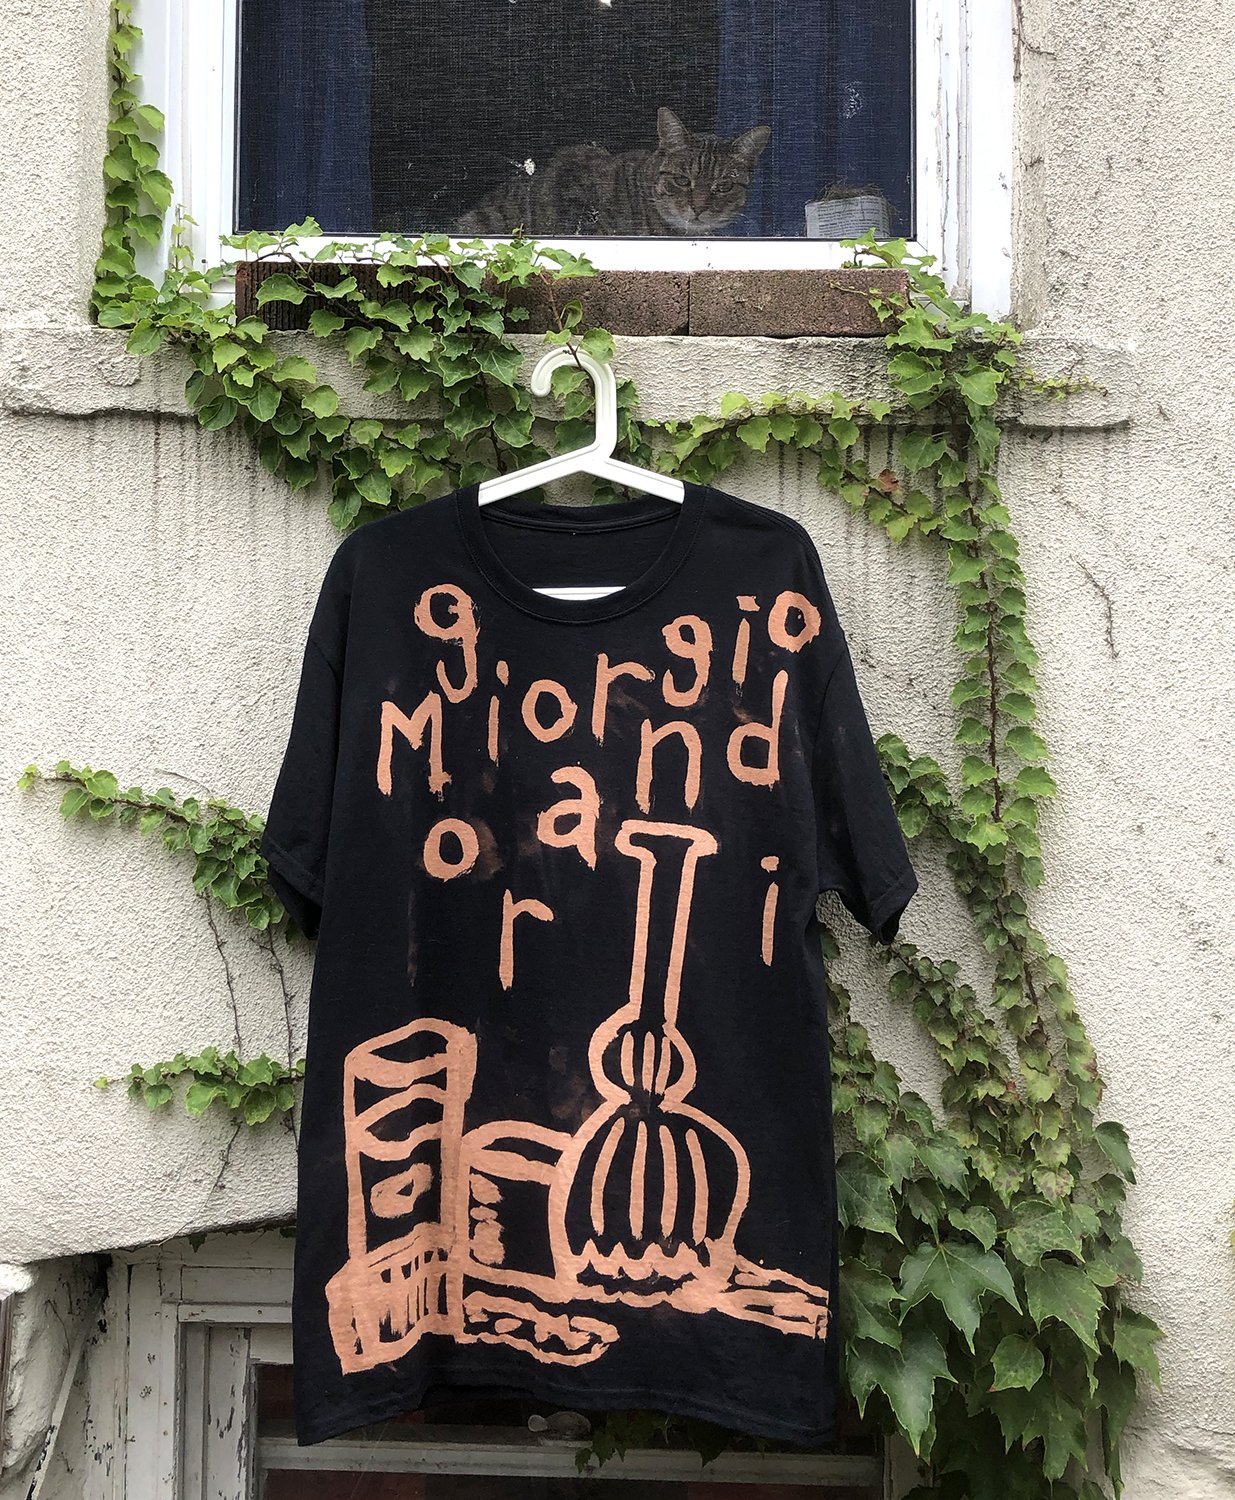 Giorgio Morandi t-shirt